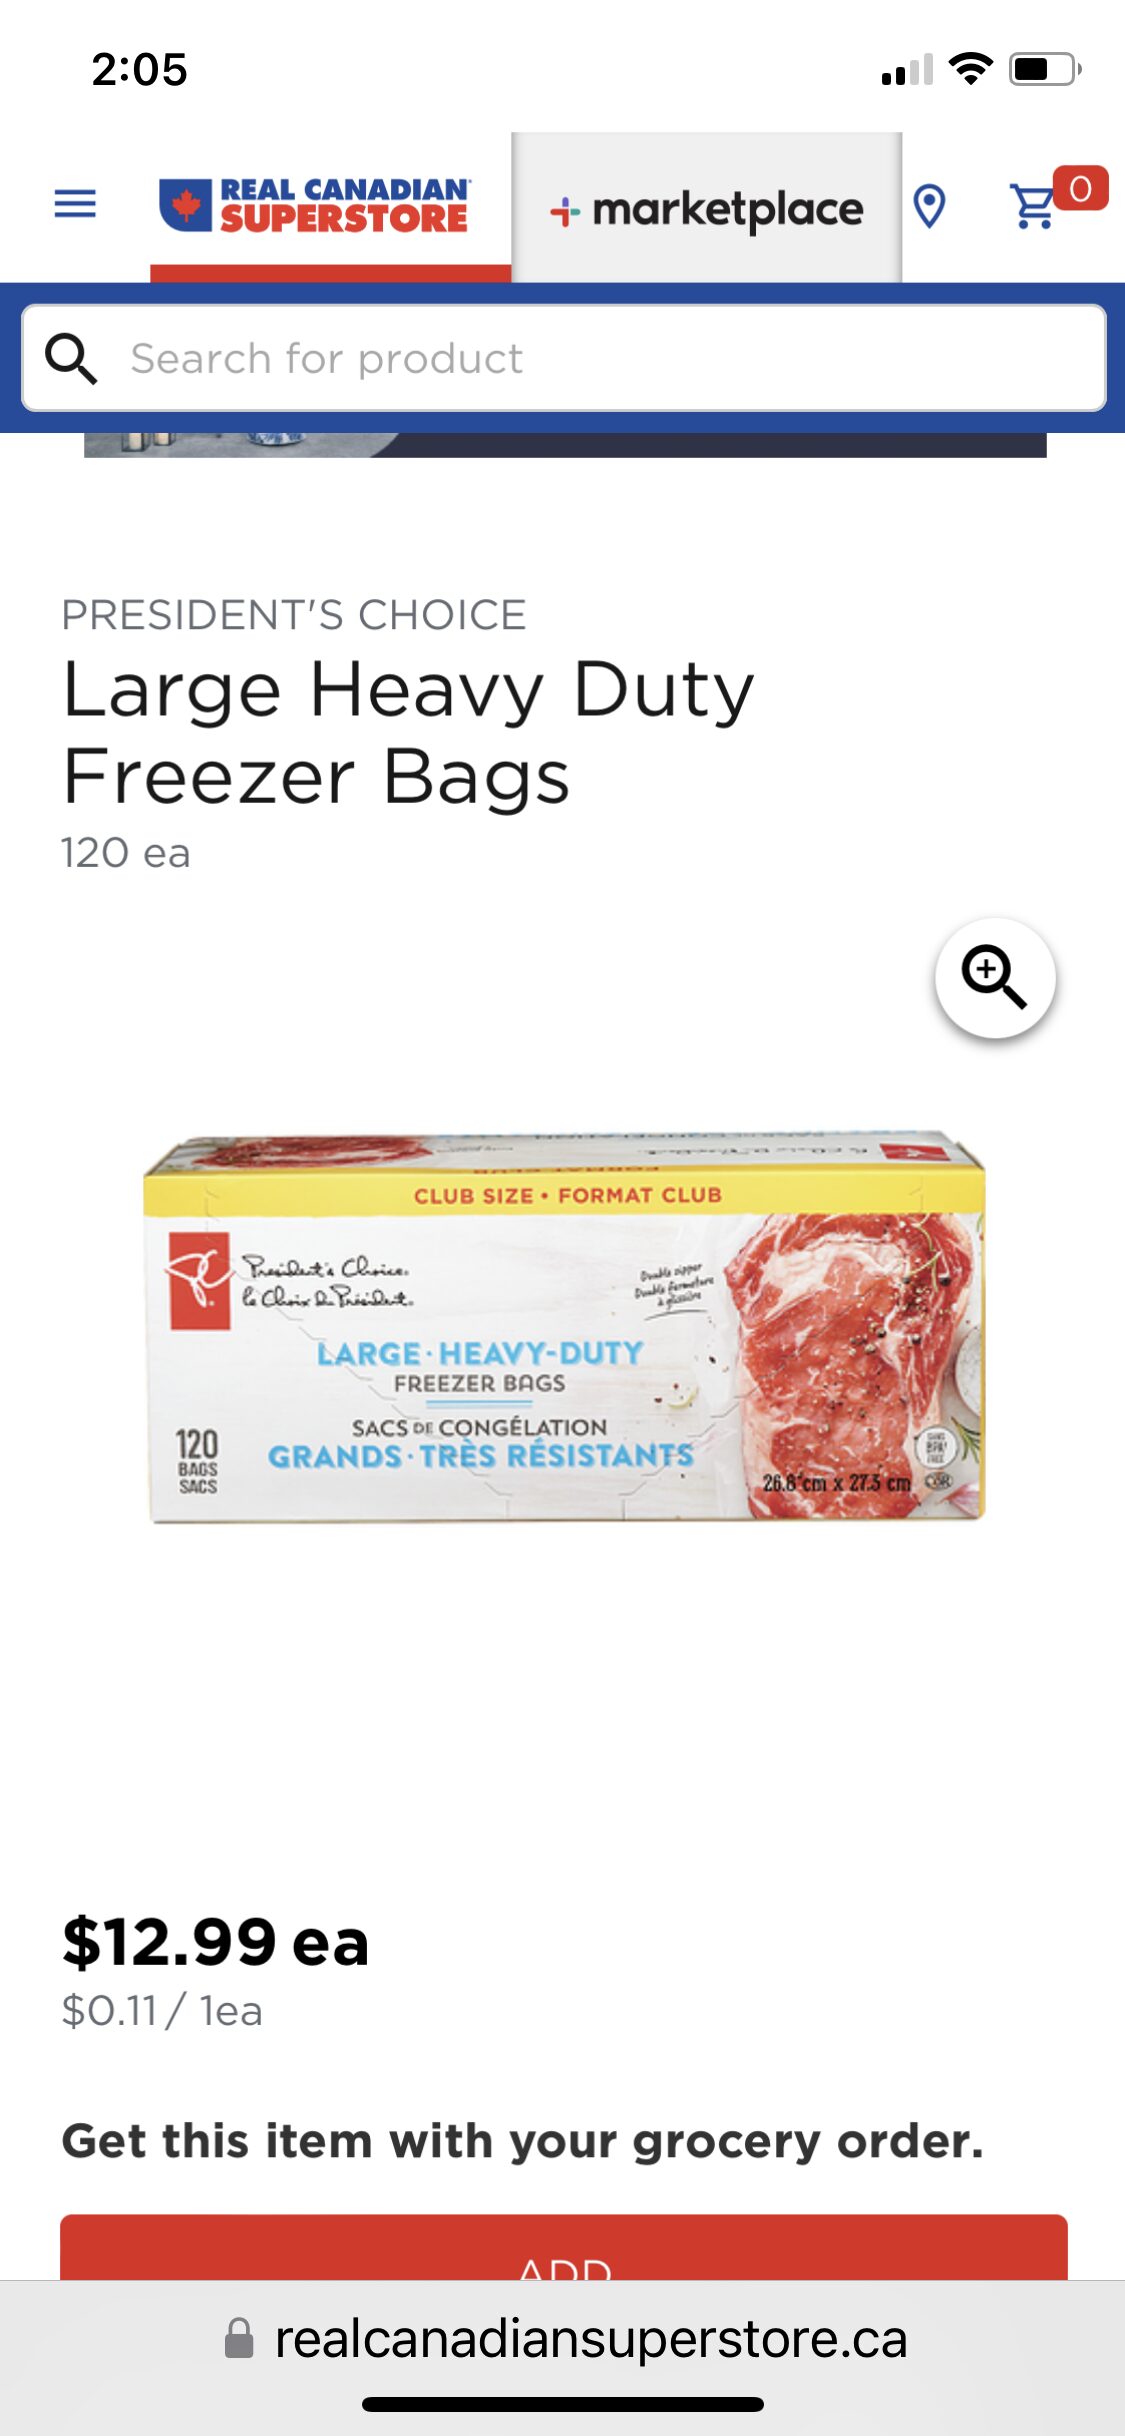 President's Choice Extra Large Heavy Duty Freezer Bags - 10 ea